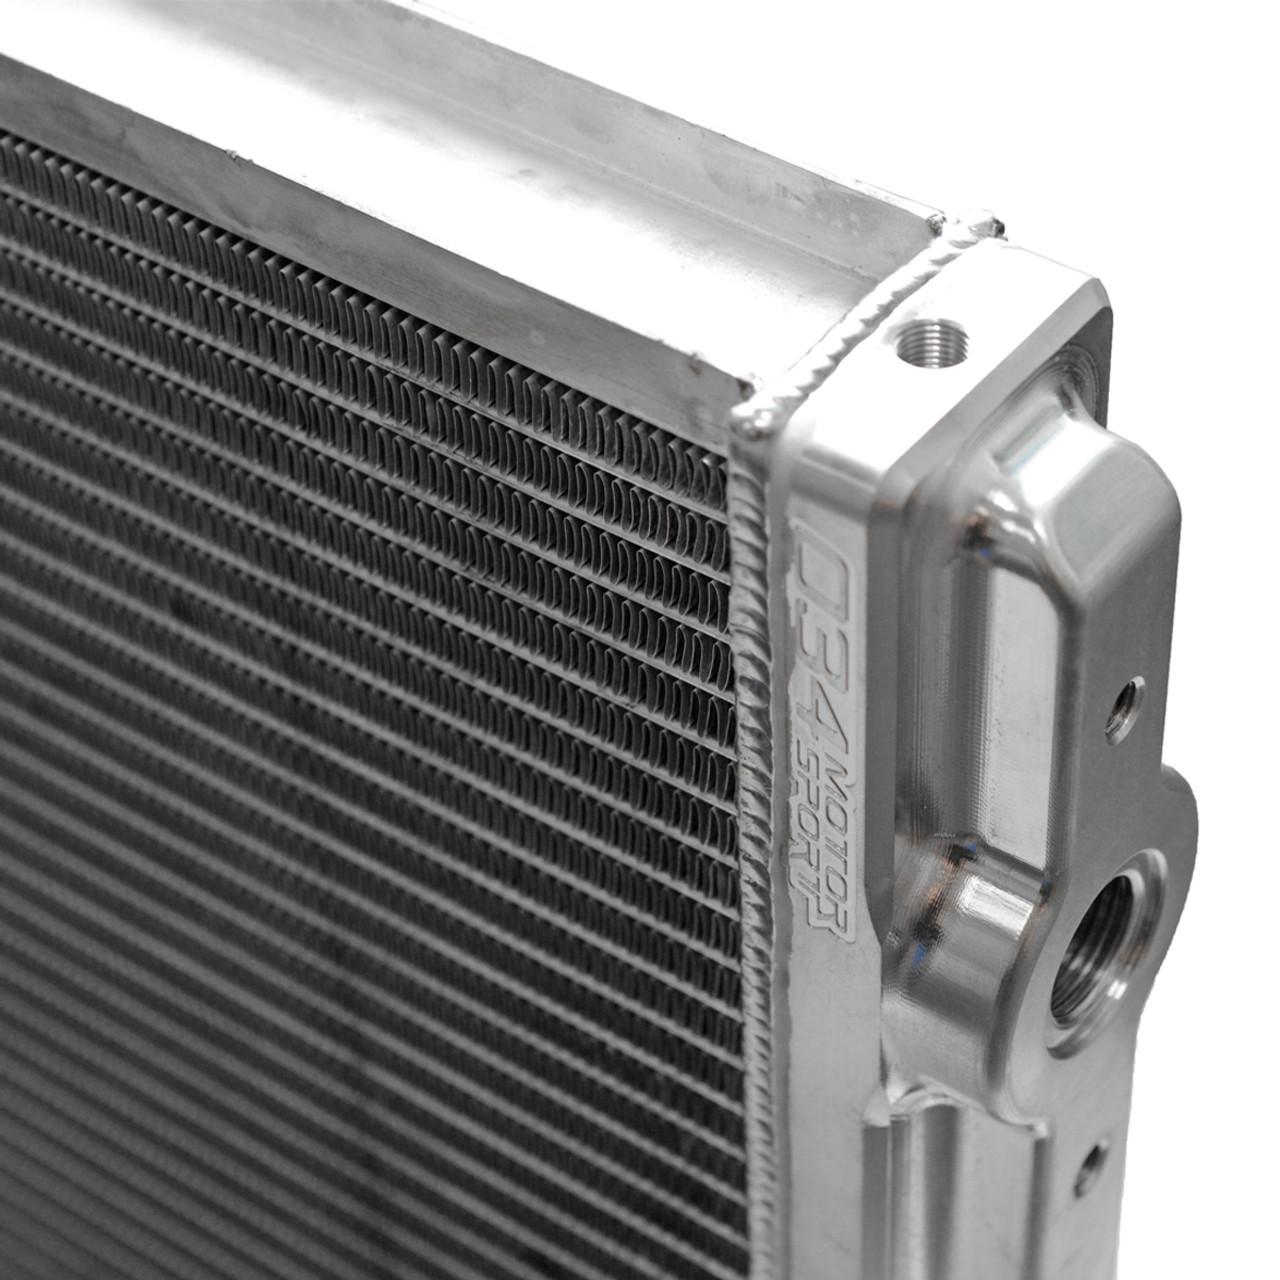 Supercharger Heat Exchanger Upgrade Kit for Audi B8/B8.5 Q5/SQ5